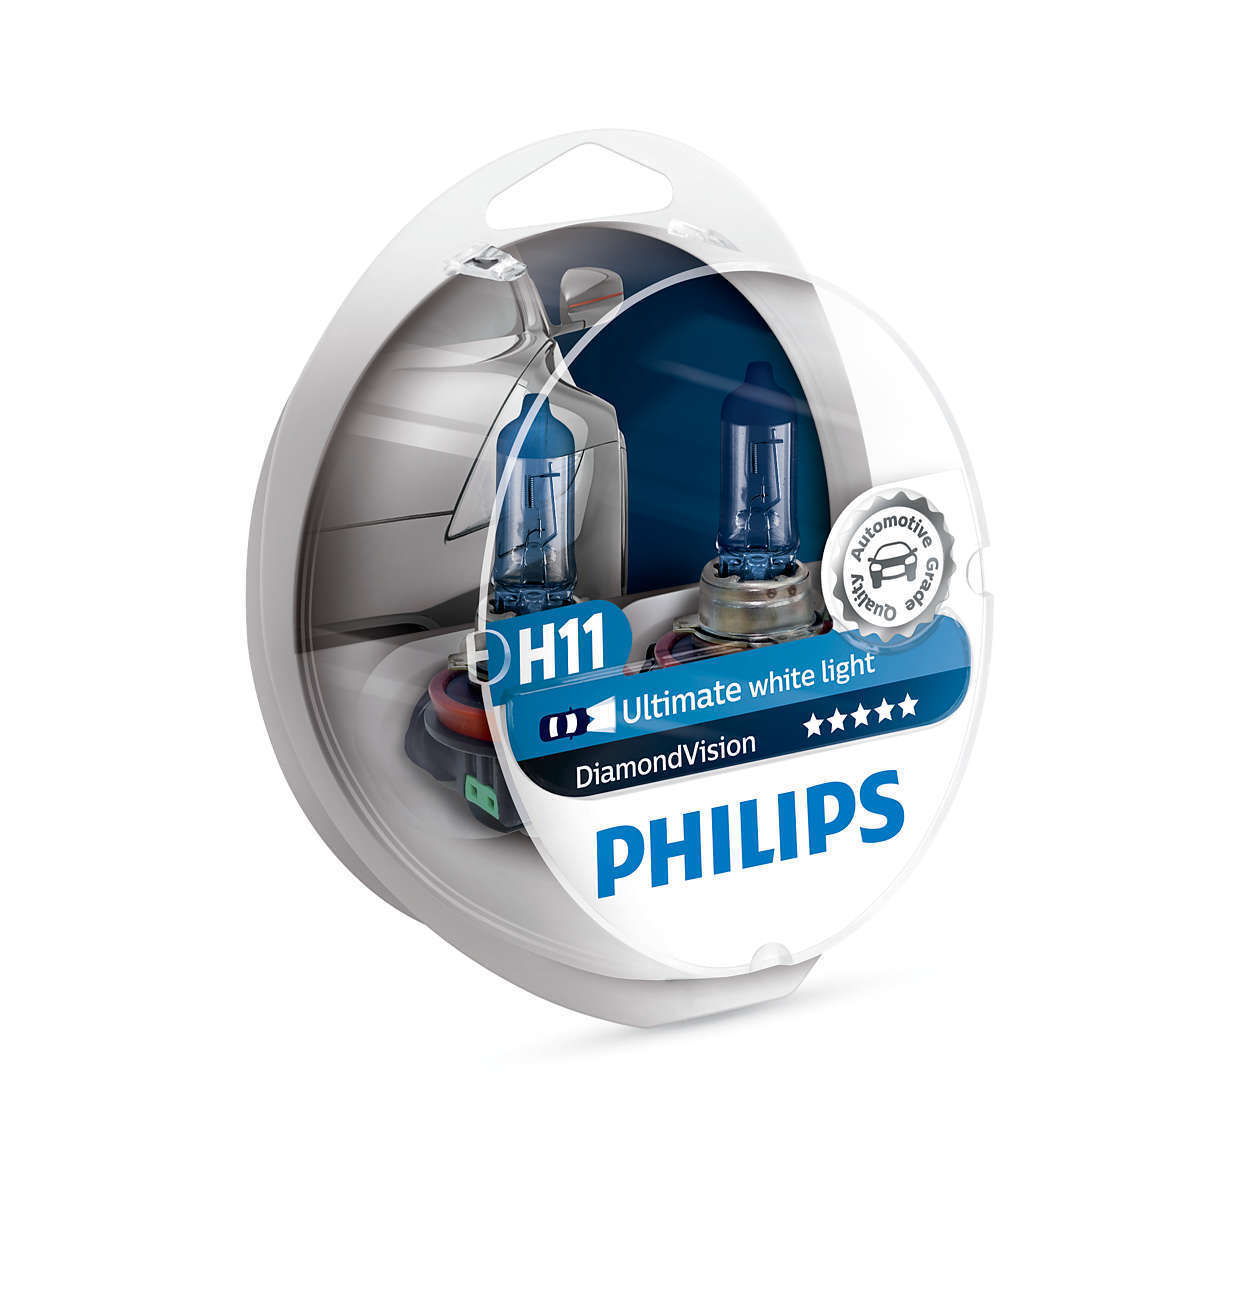 Philips H11 Diamond Vision Headlight Bulbs up to 5000K 12V55W (pack of 2)